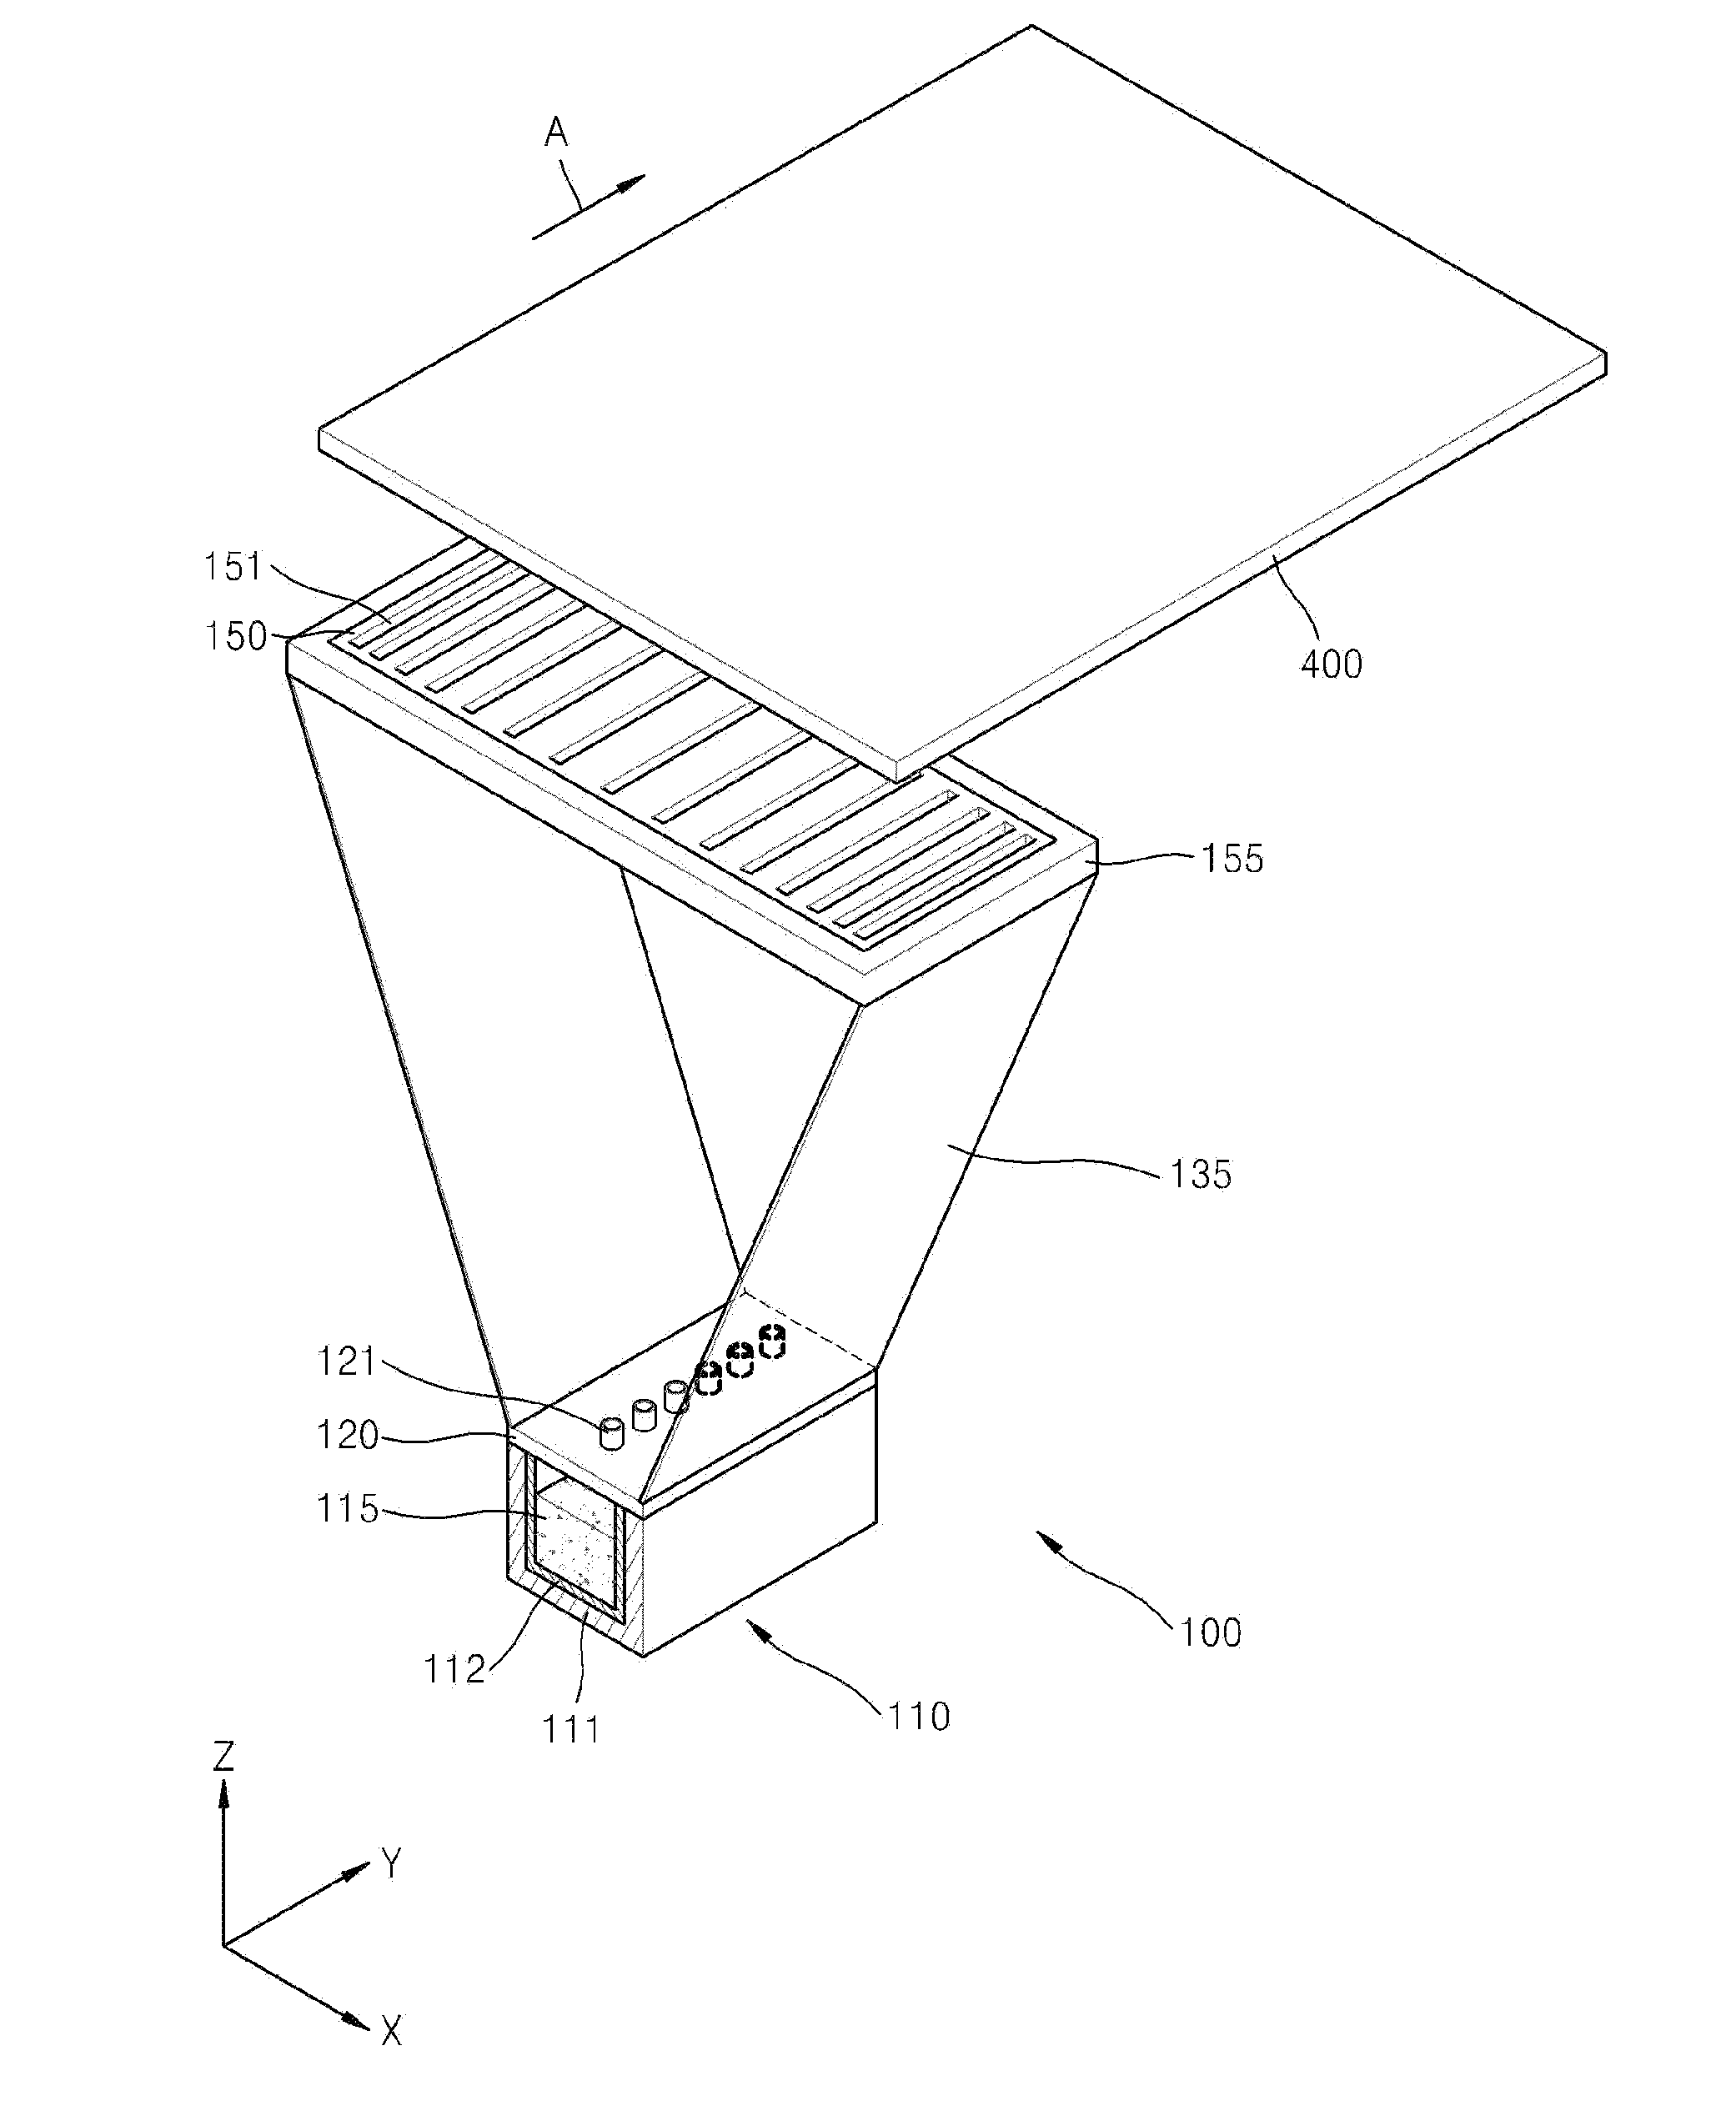 Tension apparatus for patterning slit sheet